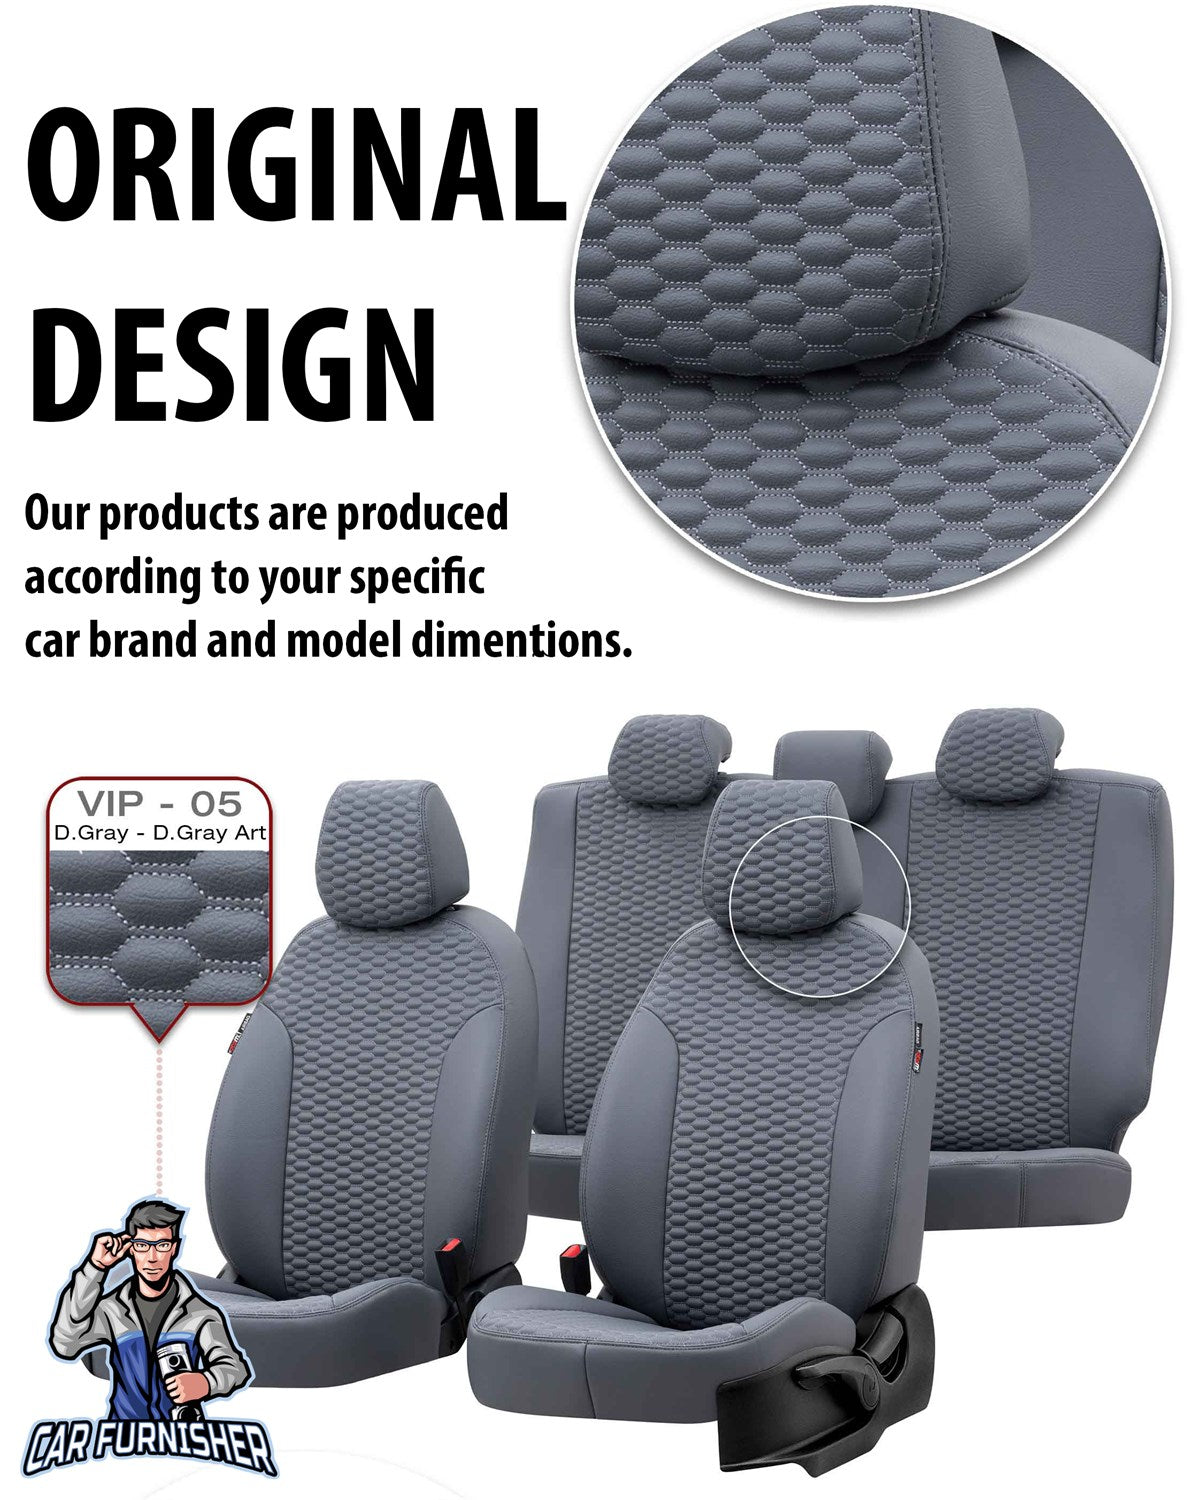 Hyundai i30 Seat Covers Tokyo Leather Design Black Leather